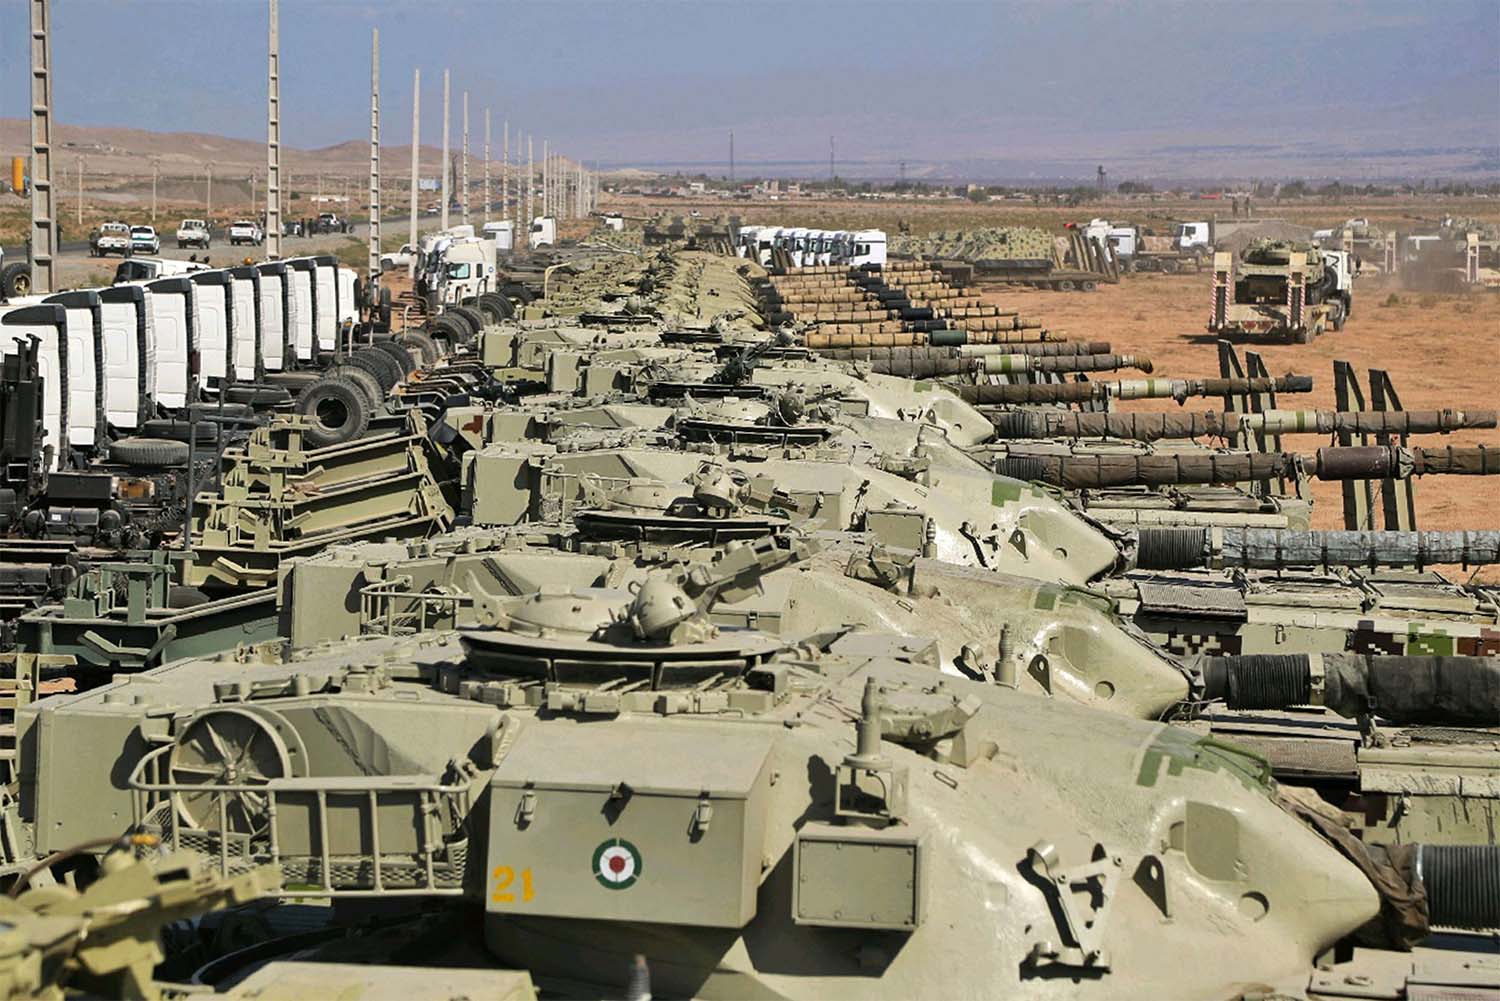 Iran has long criticised Azerbaijan's military ties with Israel